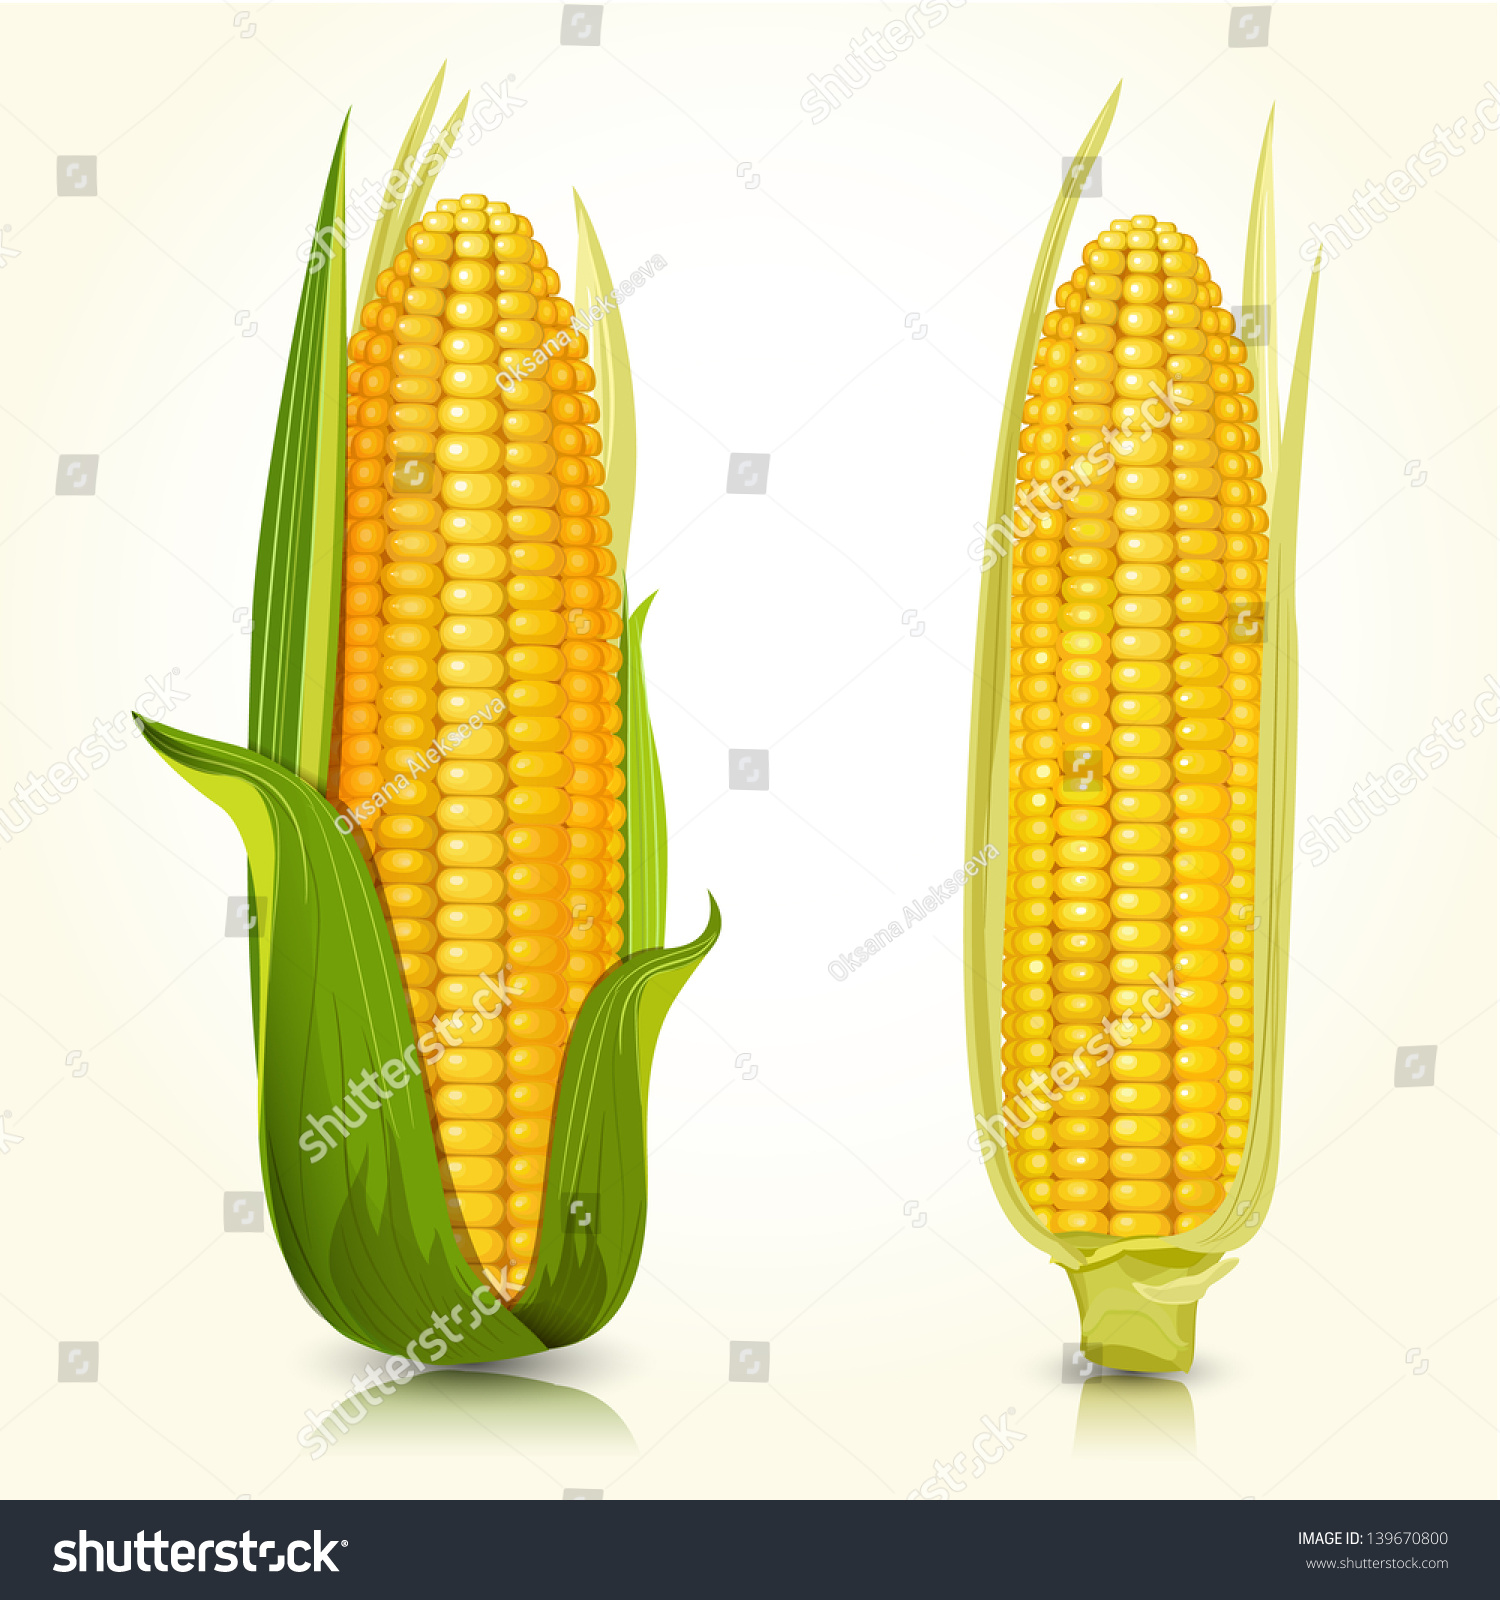 Ripe corn on the cob #139670800